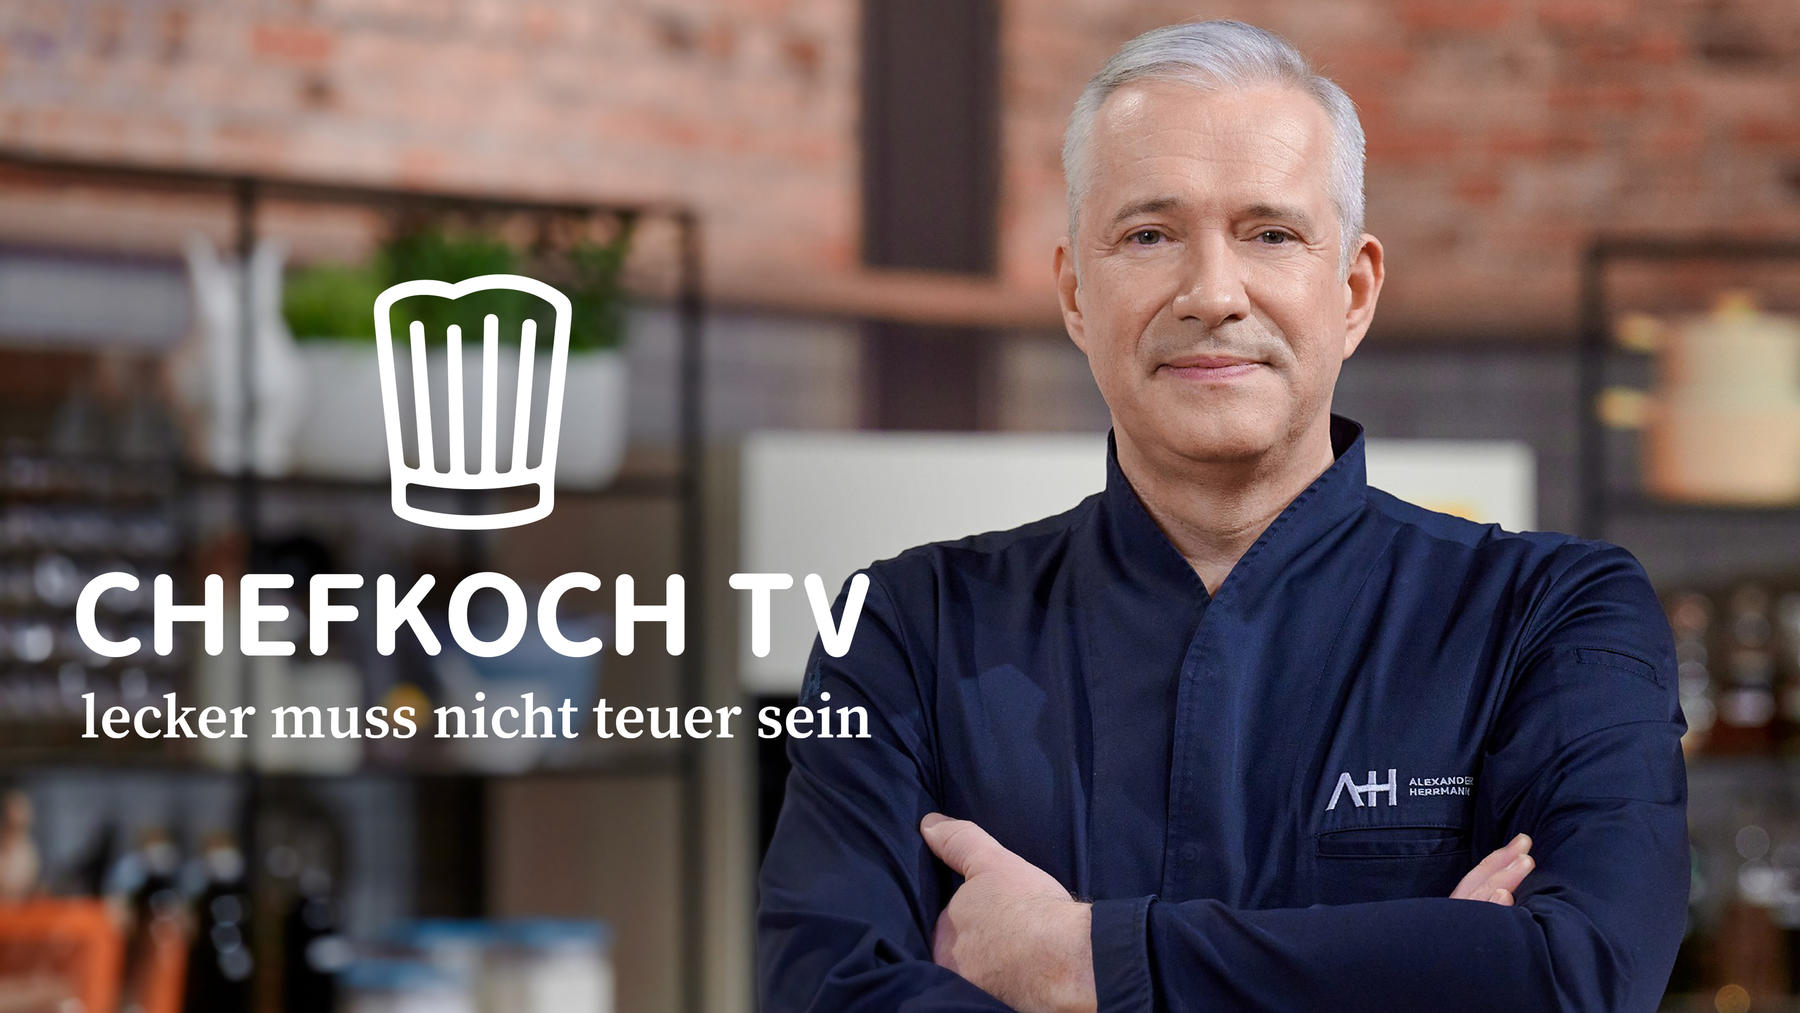 Chefkoch TV - Lecker muss nicht teuer sein